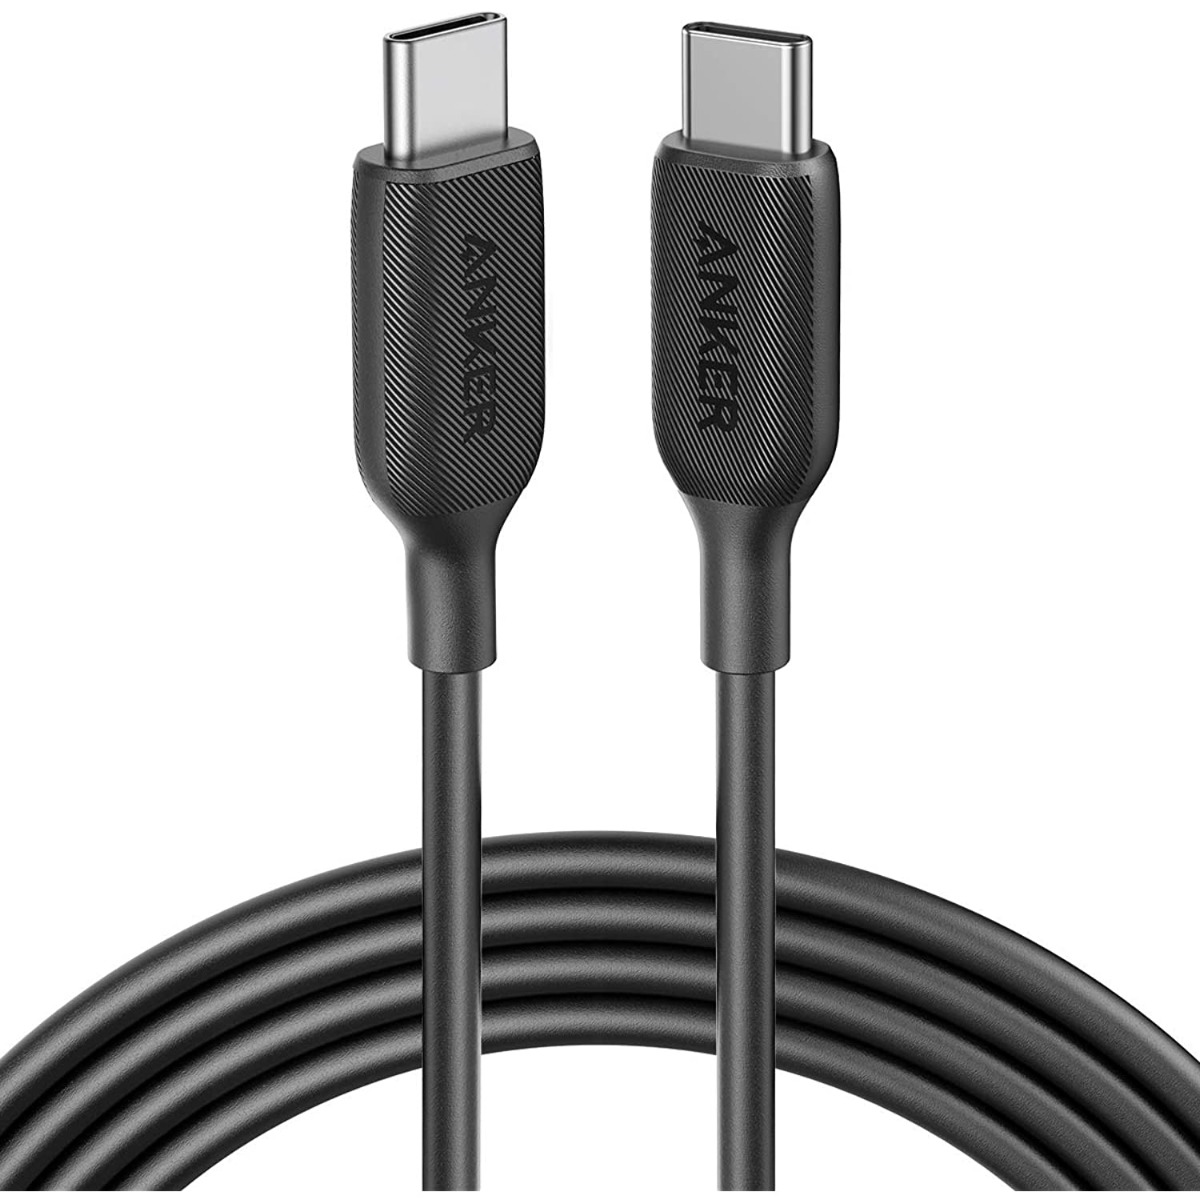 Anker PowerLine III Type-C USB Cable, 0.9 Meter - Black